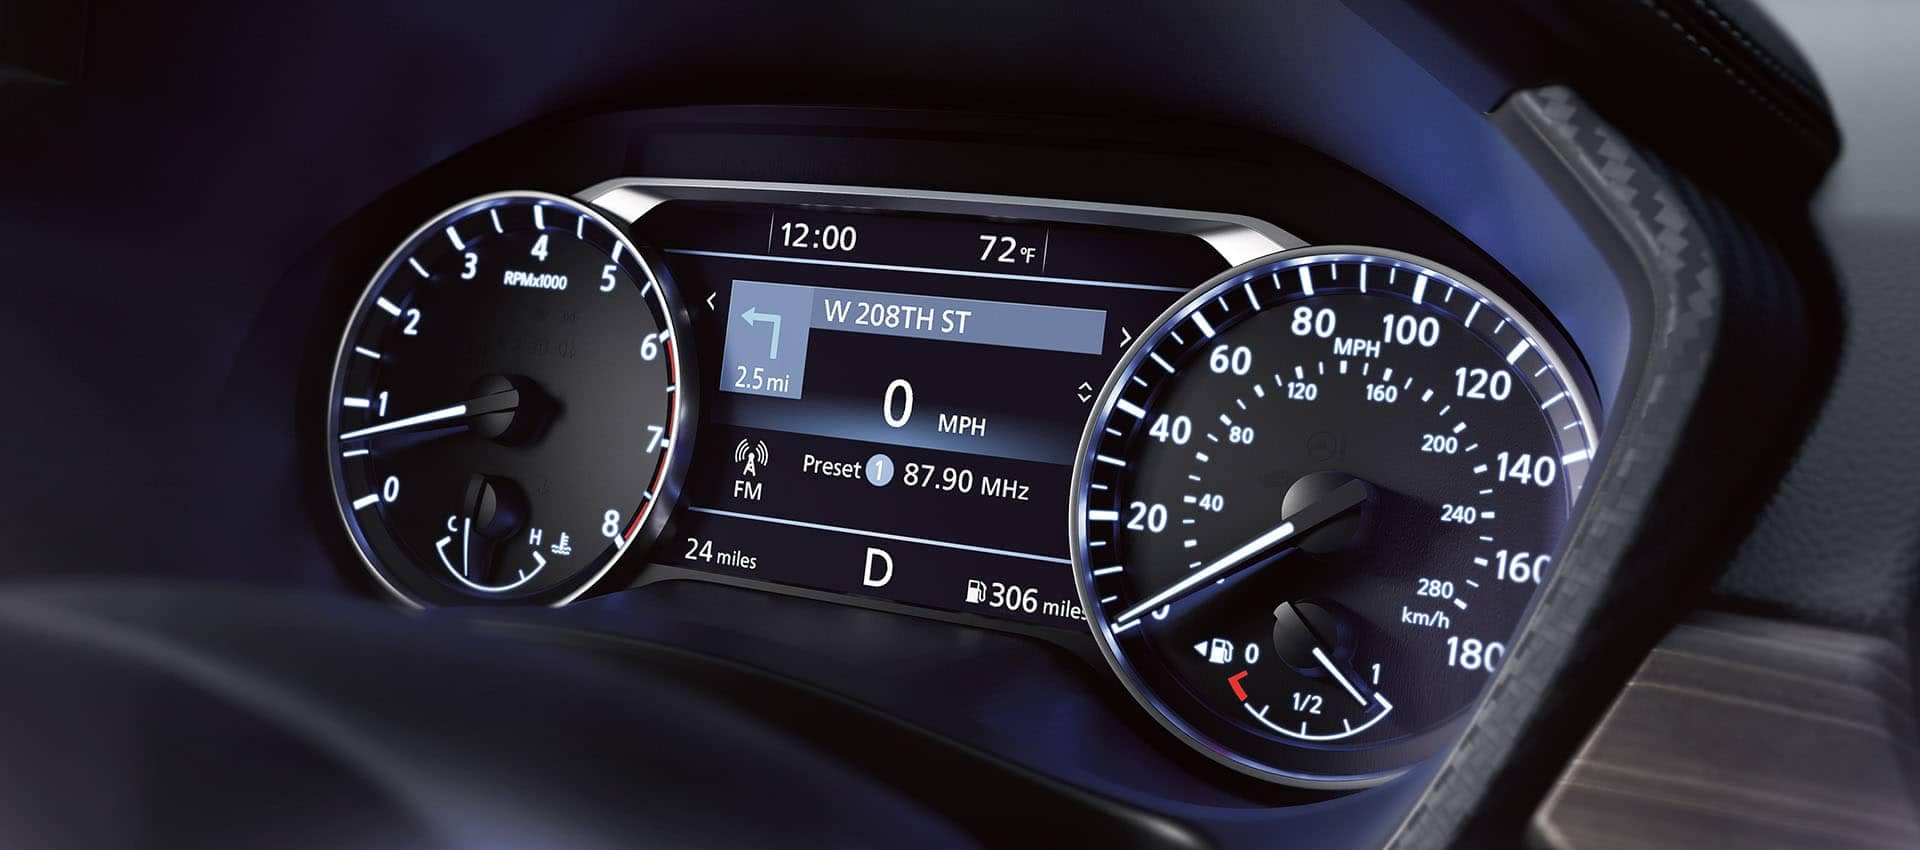 2020 Nissan Altima front panel of gauges